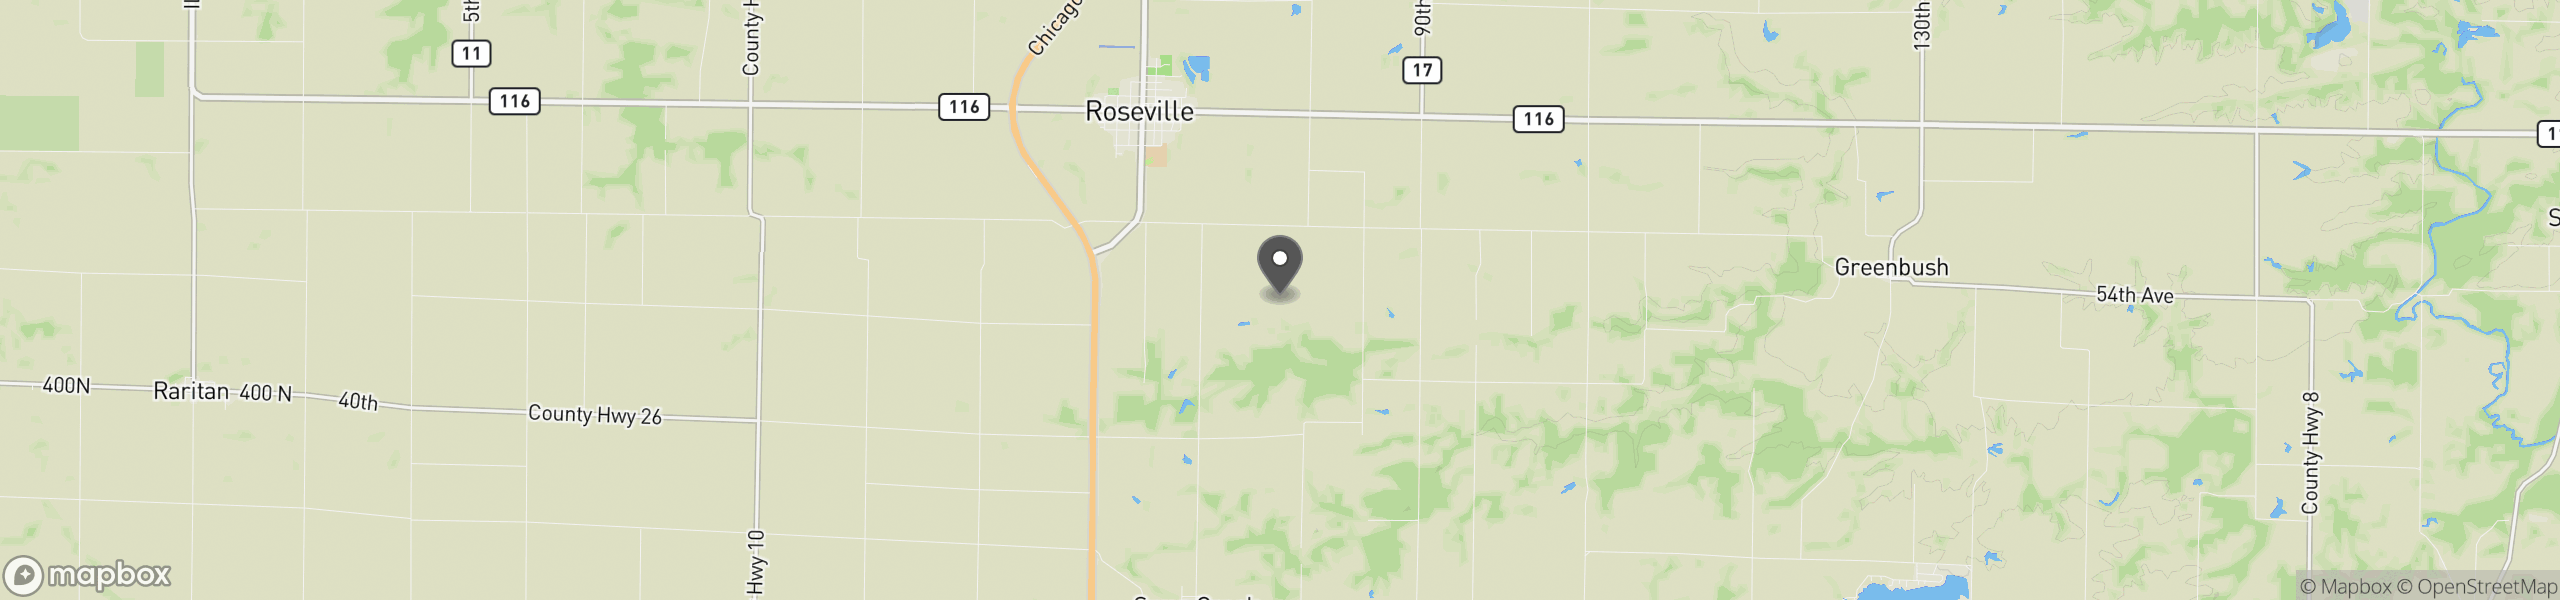 Roseville, IL 61473